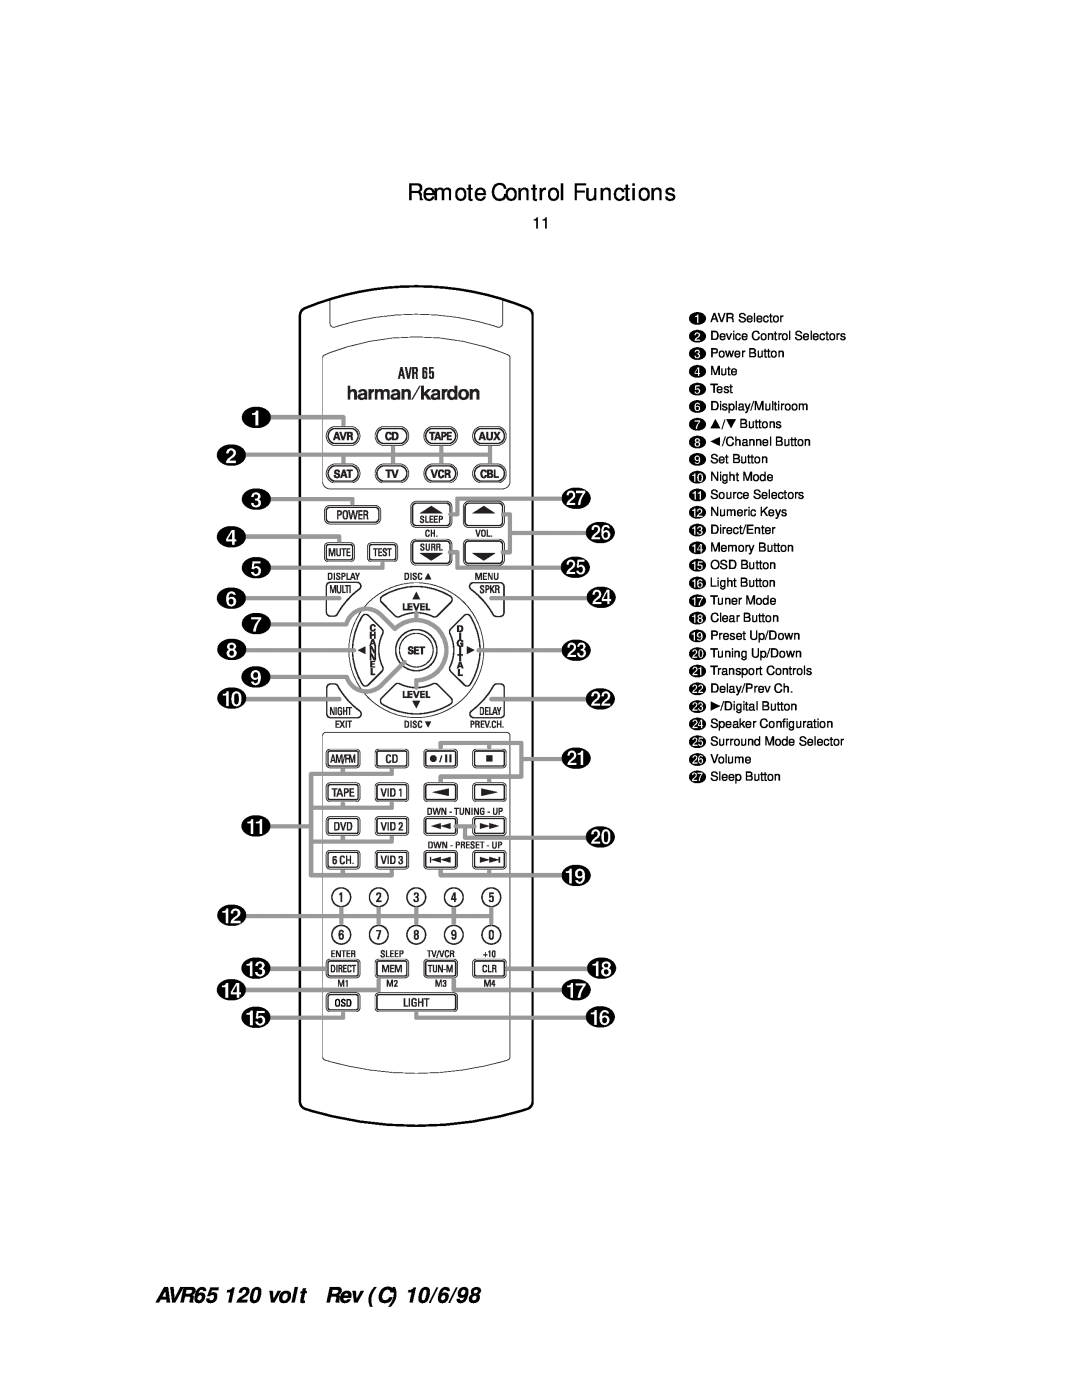 Harman-Kardon manual Remote Control Functions, AVR65 120 volt Rev C 10/6/98 